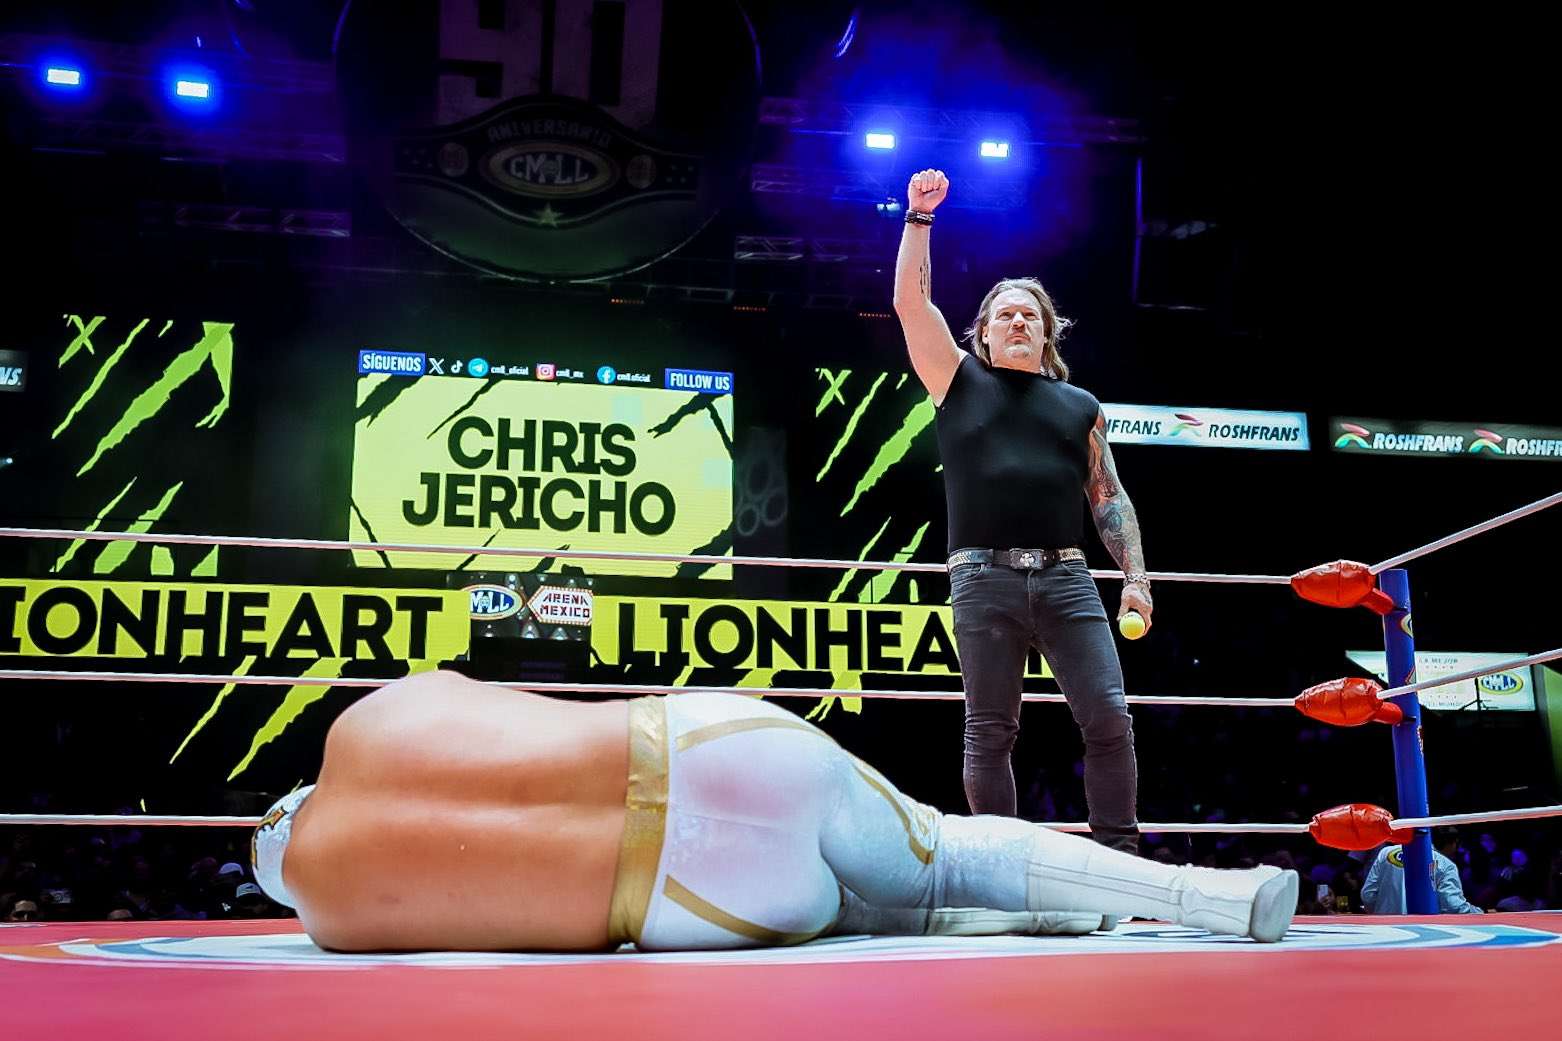 Chris Jericho attacks Místico in the Arena Mexico